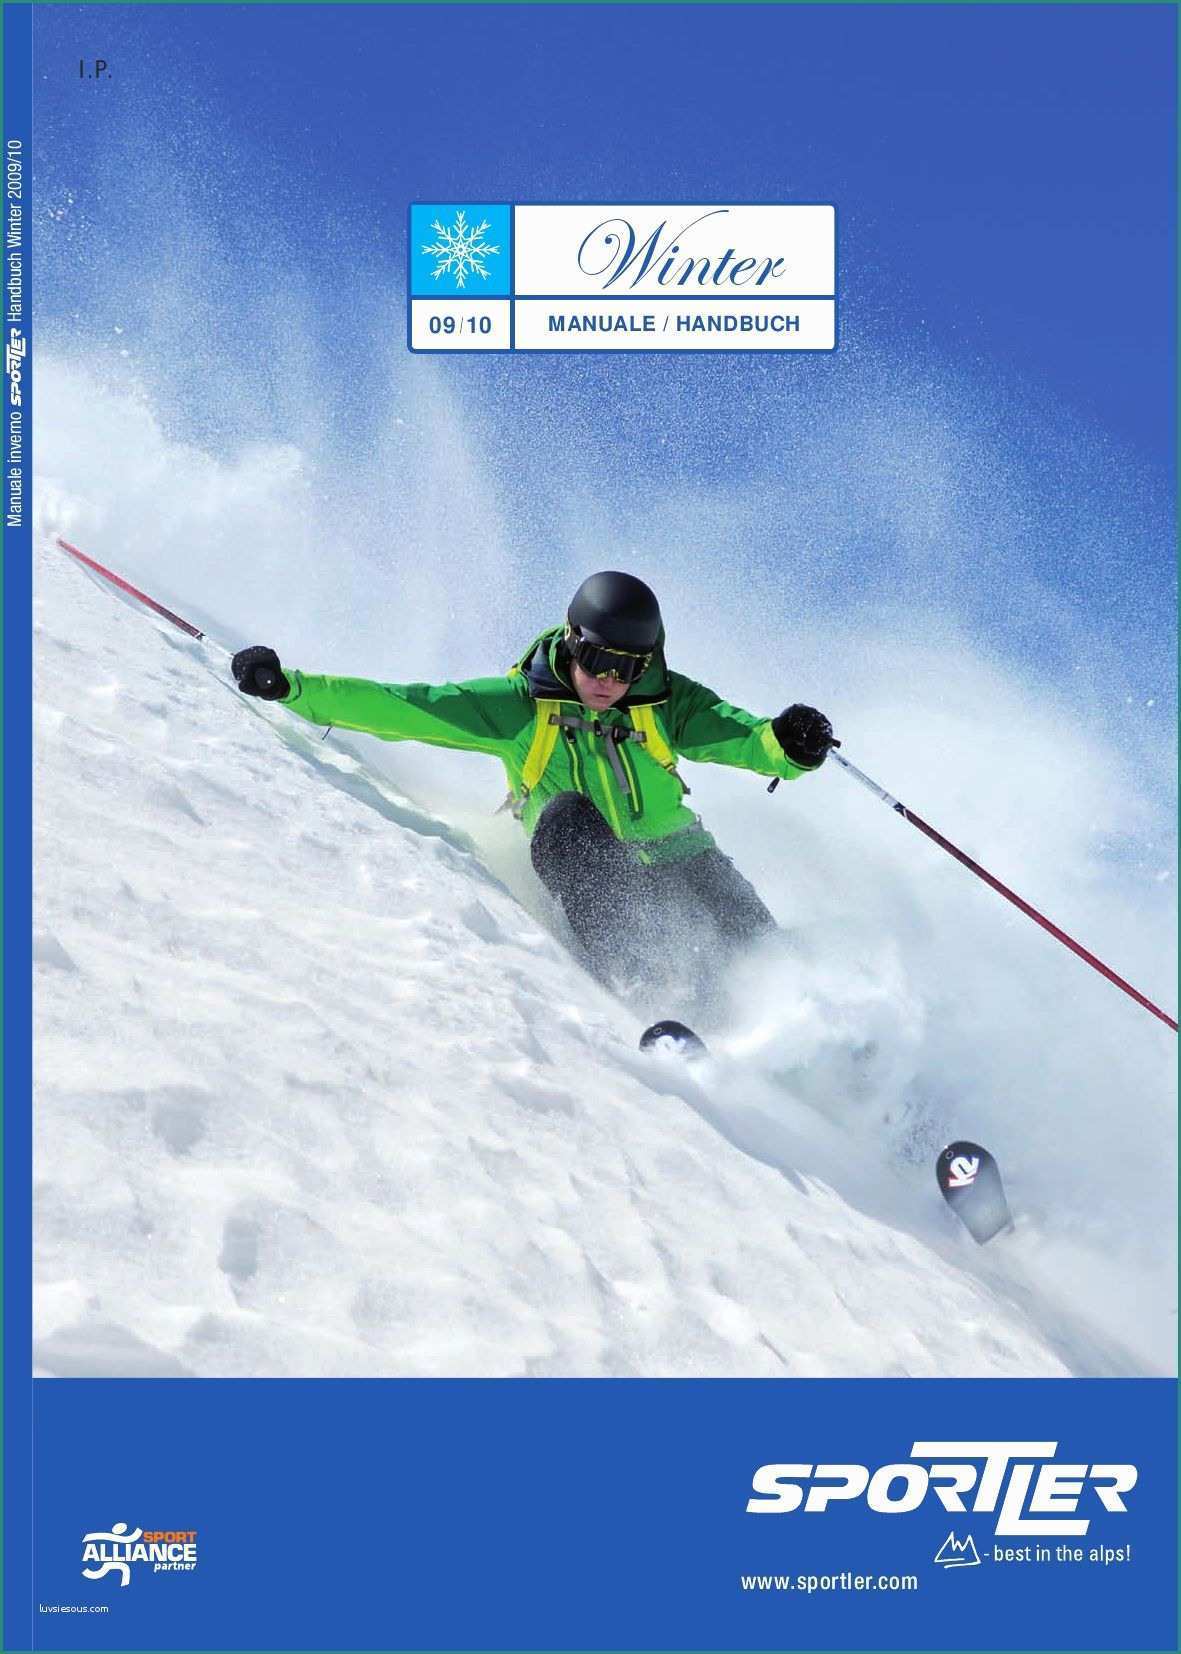 Premium Porte Interne Stile Inglese E Sportler Catalog Winter 09 10 A by Sportler issuu